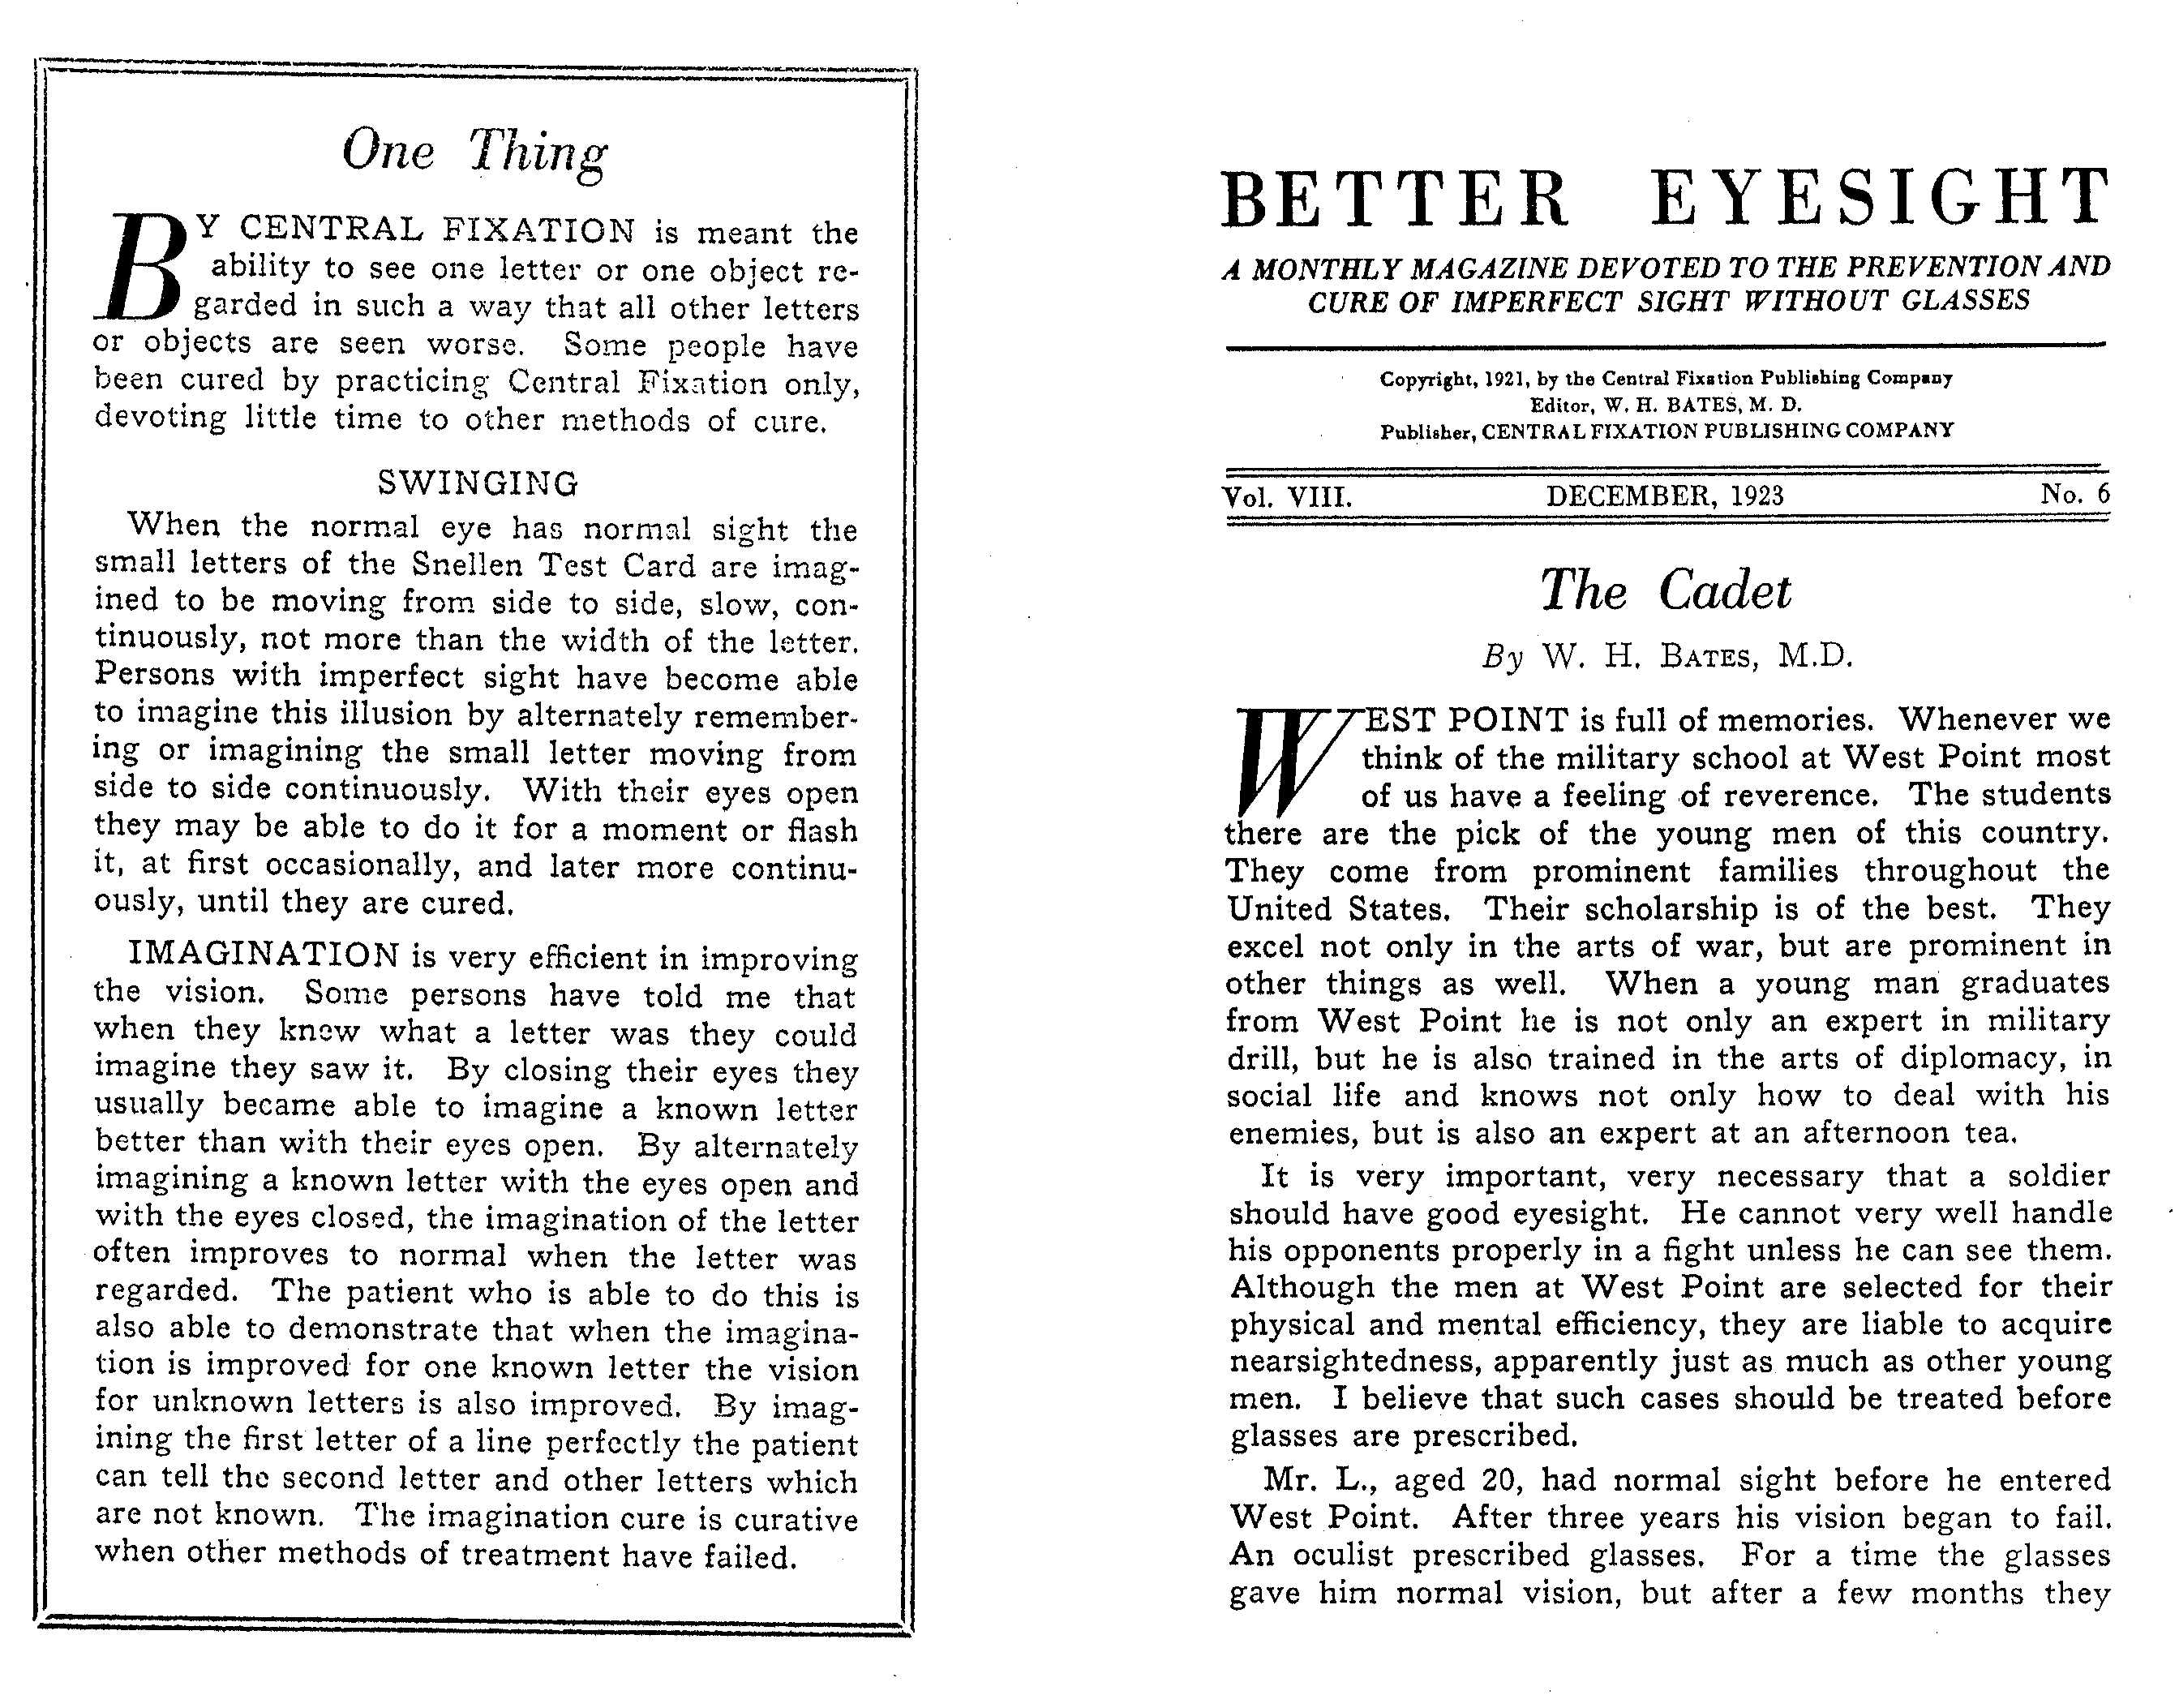 Better Eyesight, Dec. 1923 - 2